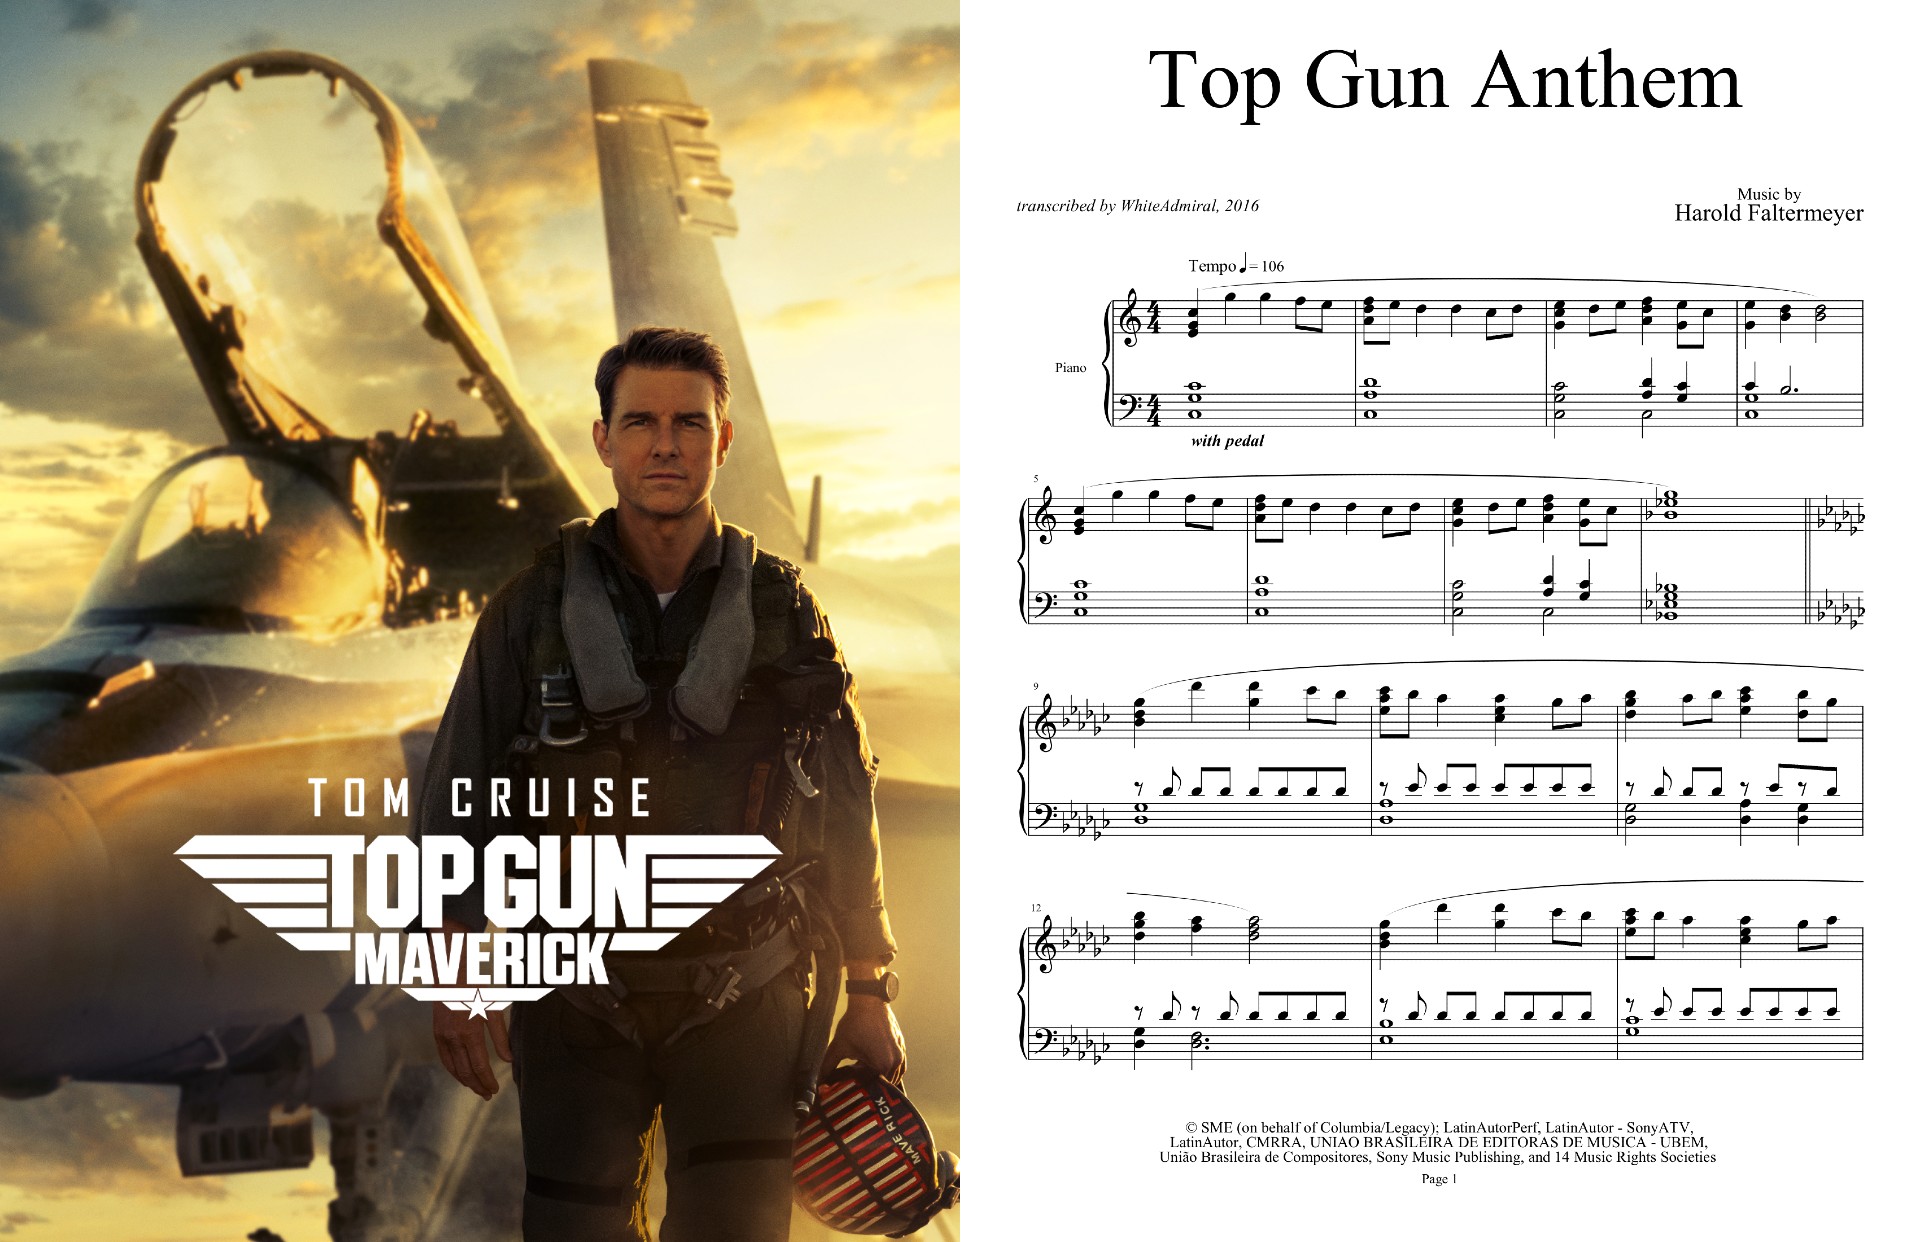 Top Gun Anthem - Harold Faltermeyer.jpg